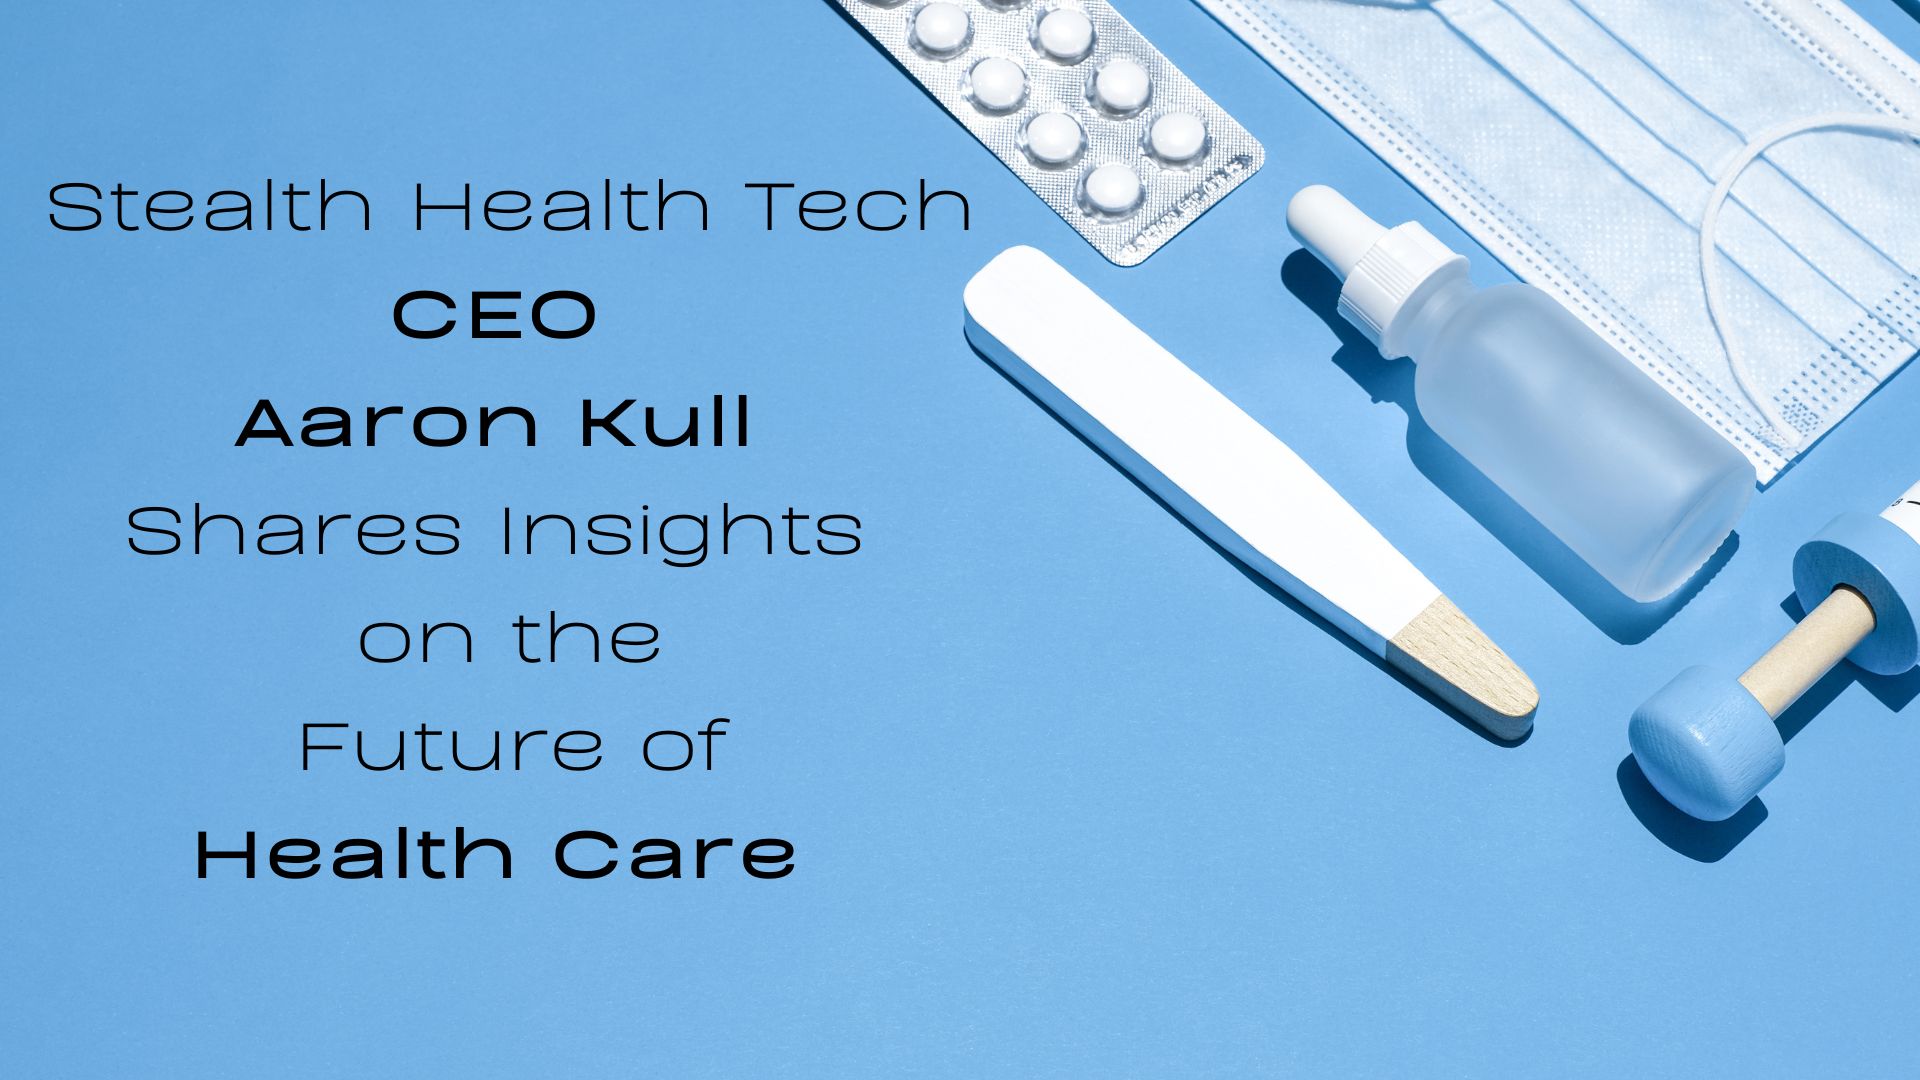 Stealth Health Tech CEO Aaron Kull